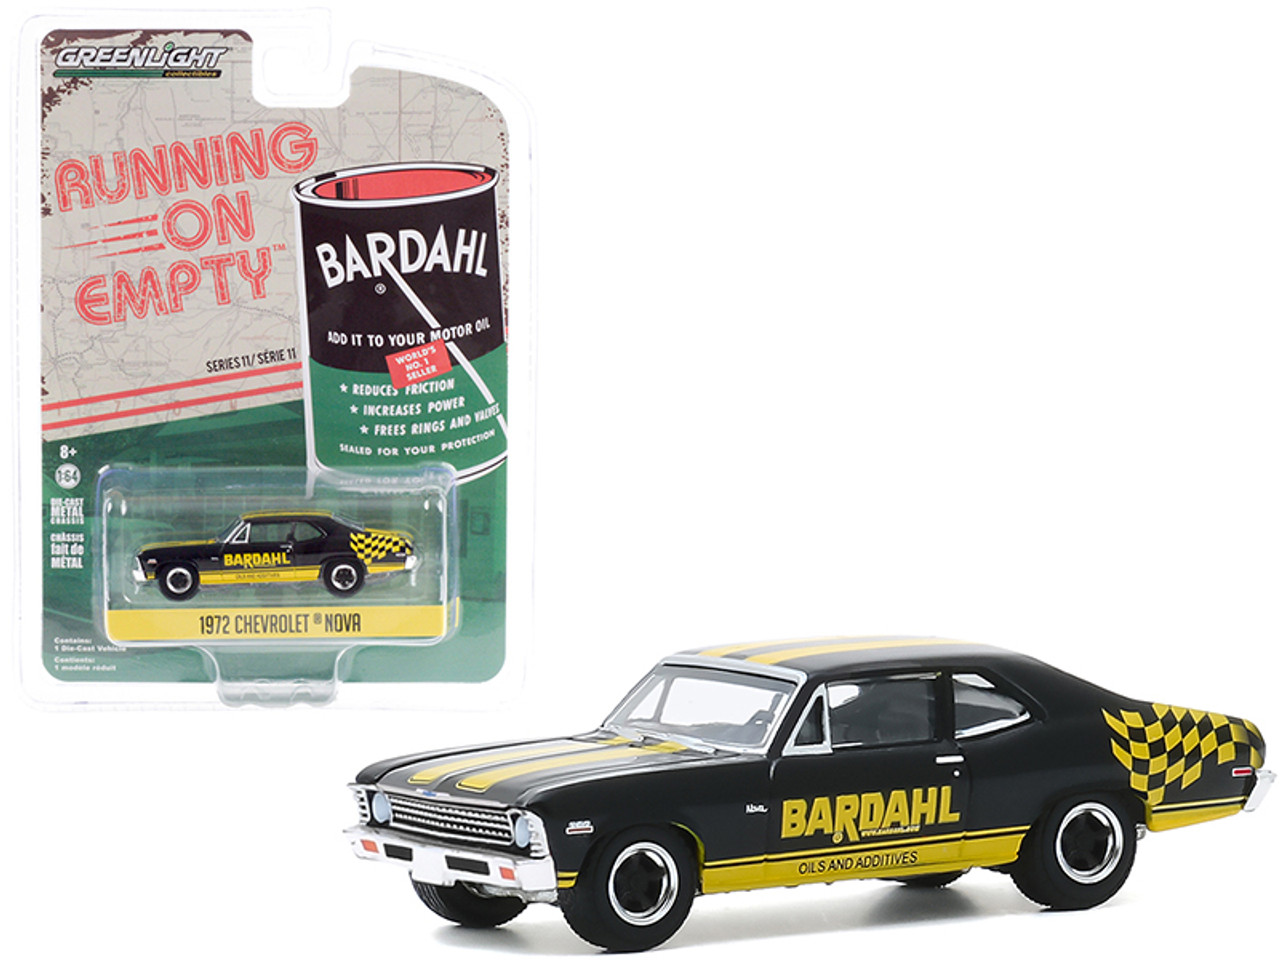 1972 Chevrolet Nova Black and Yellow "Bardahl" "Running on Empty" Series 11 1/64 Diecast Model Car by Greenlight